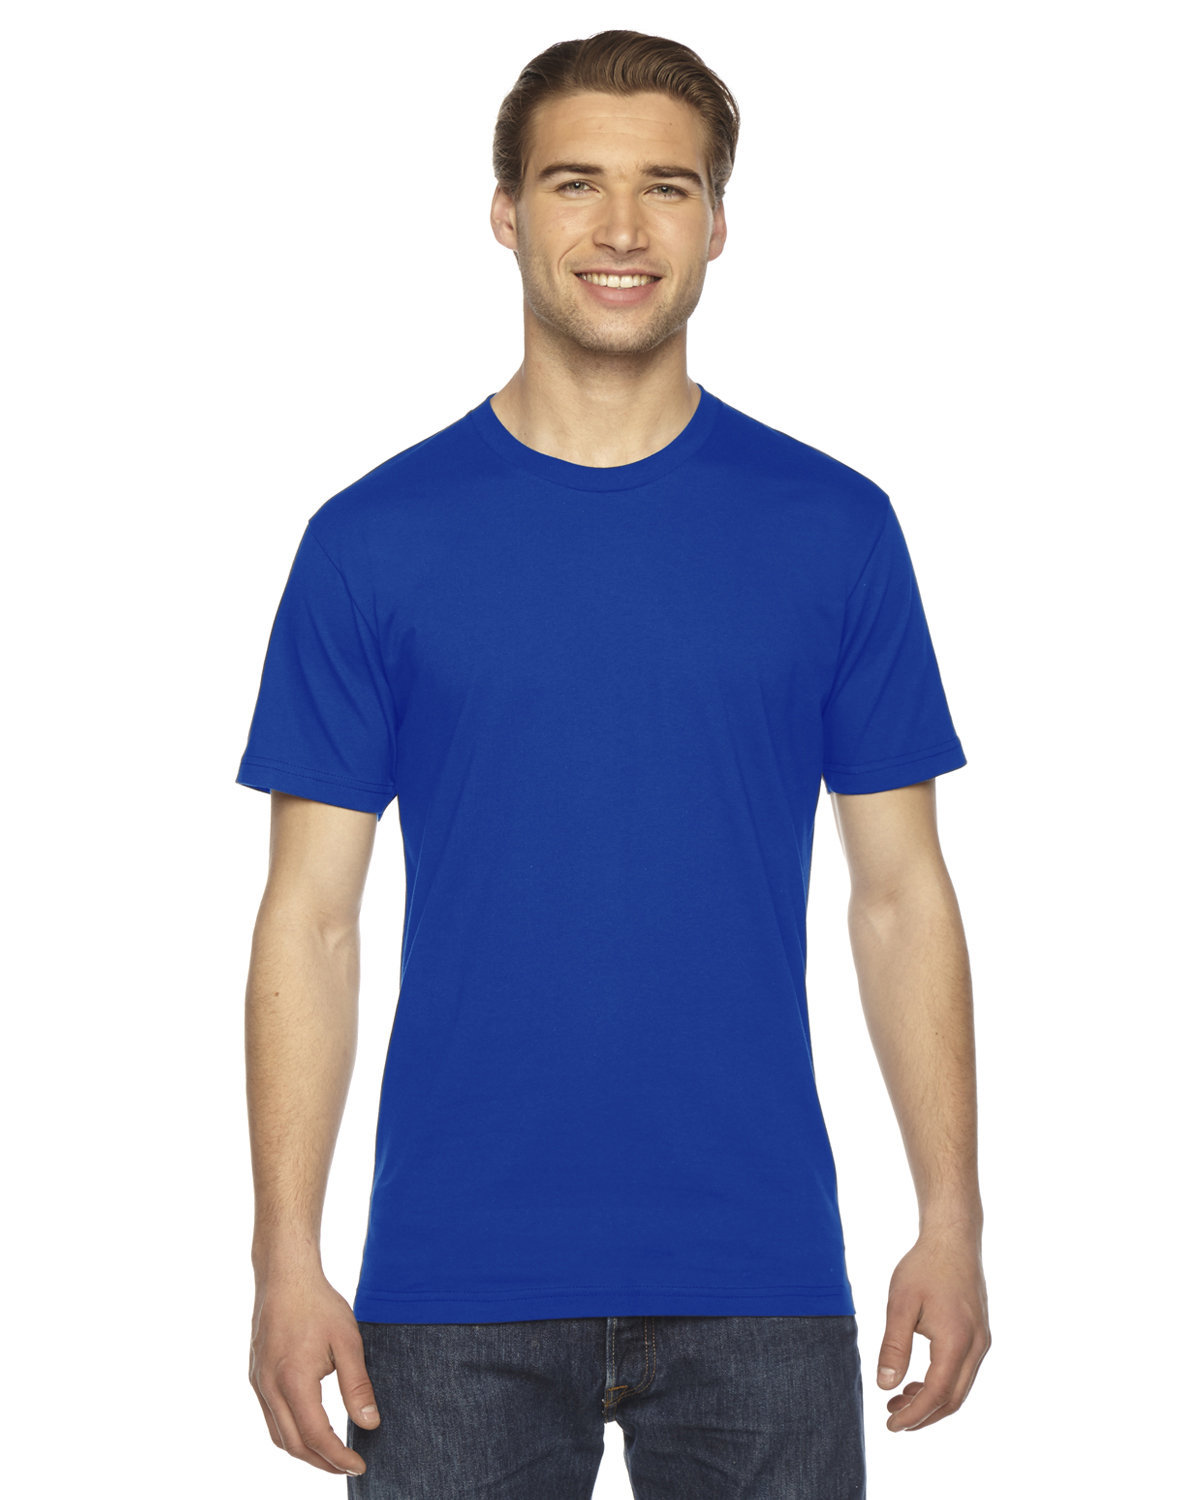 American Apparel Unisex Fine Jersey USA Made T-Shirt royal blue 